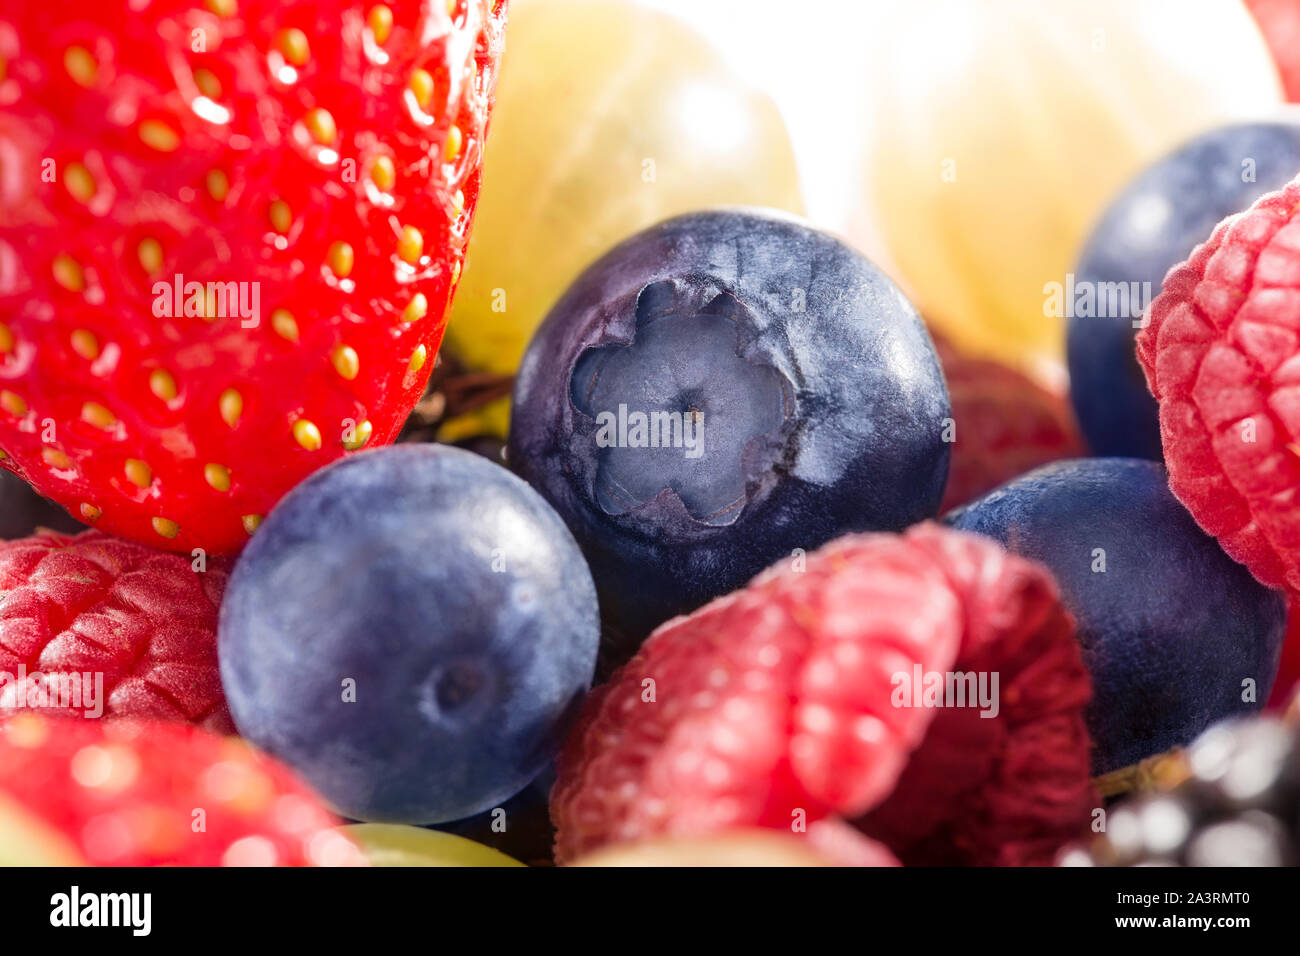 Eine Sammlung von Sommer Beeren, Erdbeeren, Heidelbeeren und Himbeeren. Stockfoto